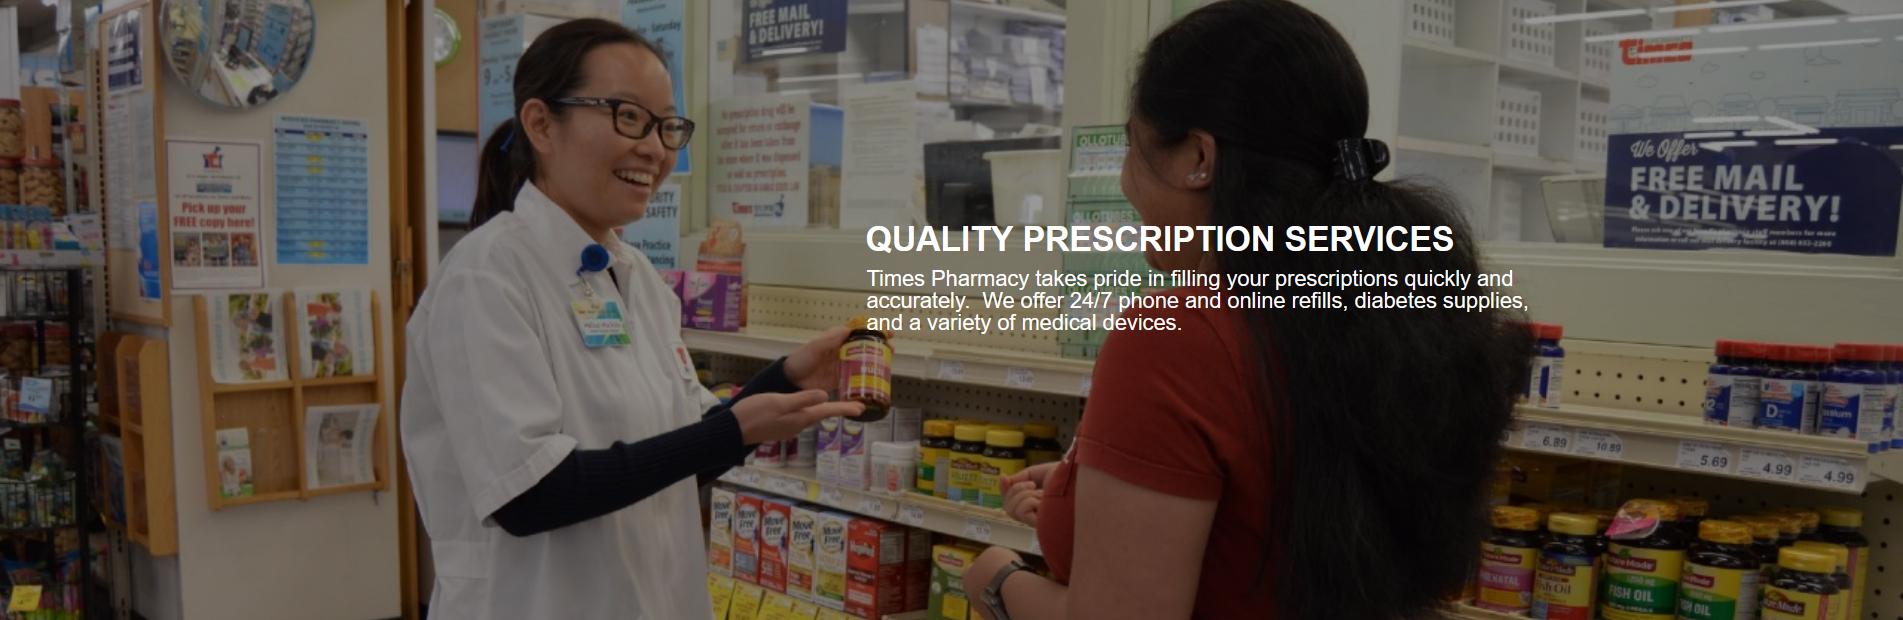 Quality Prescription Services